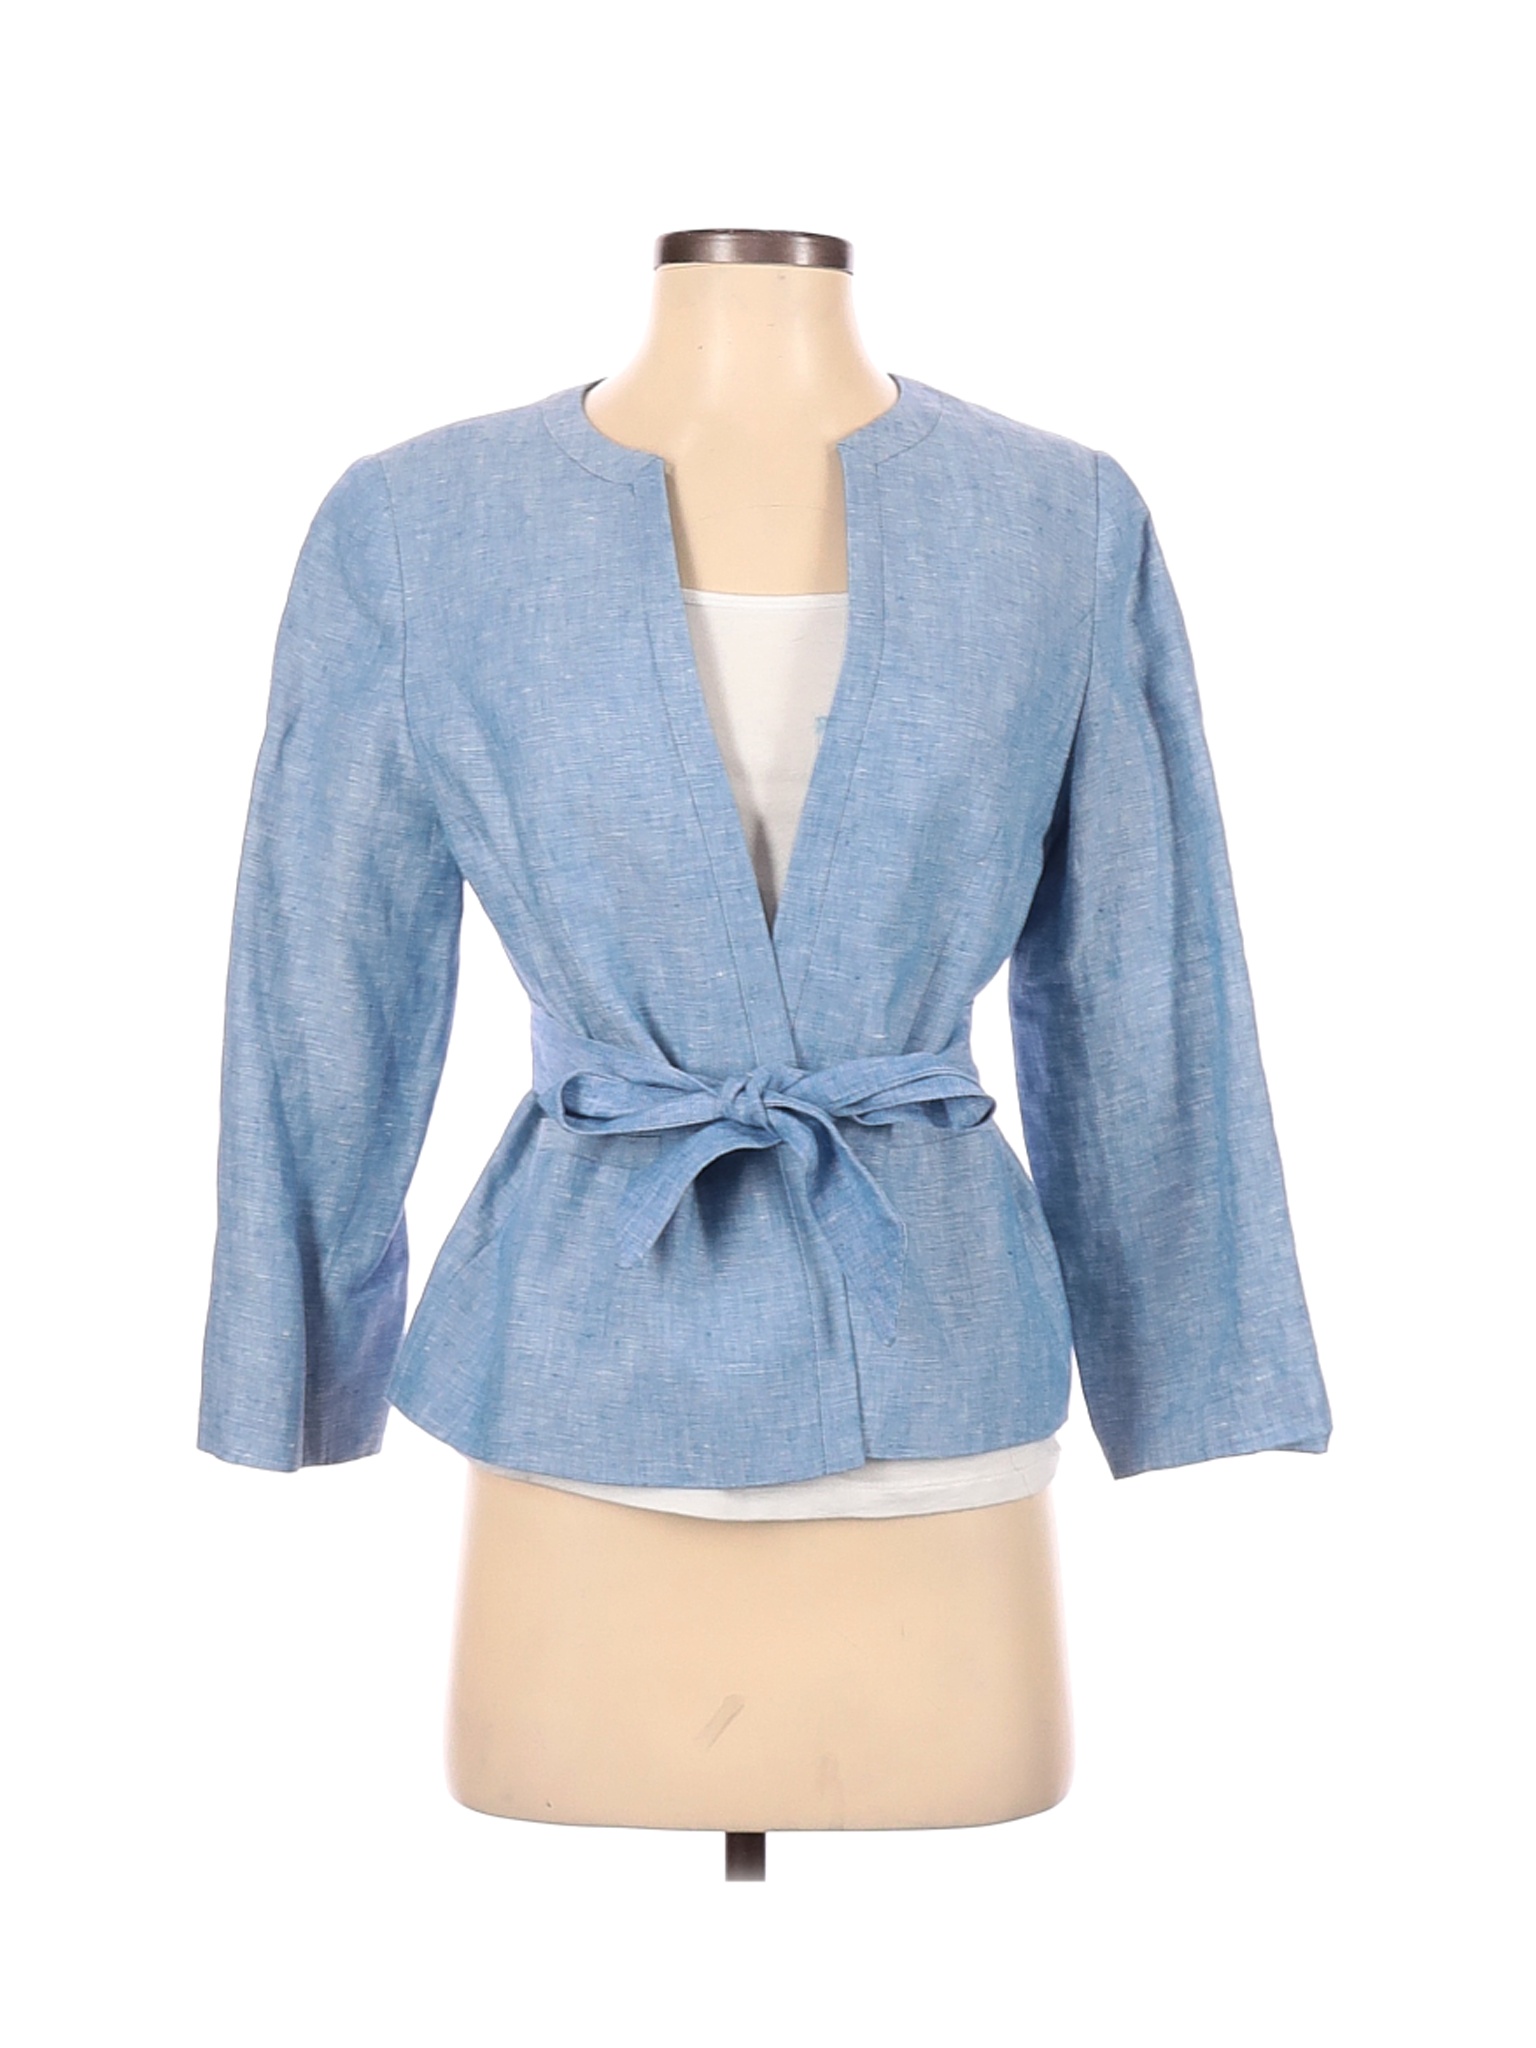 Talbots Women Blue Jacket 2 | eBay